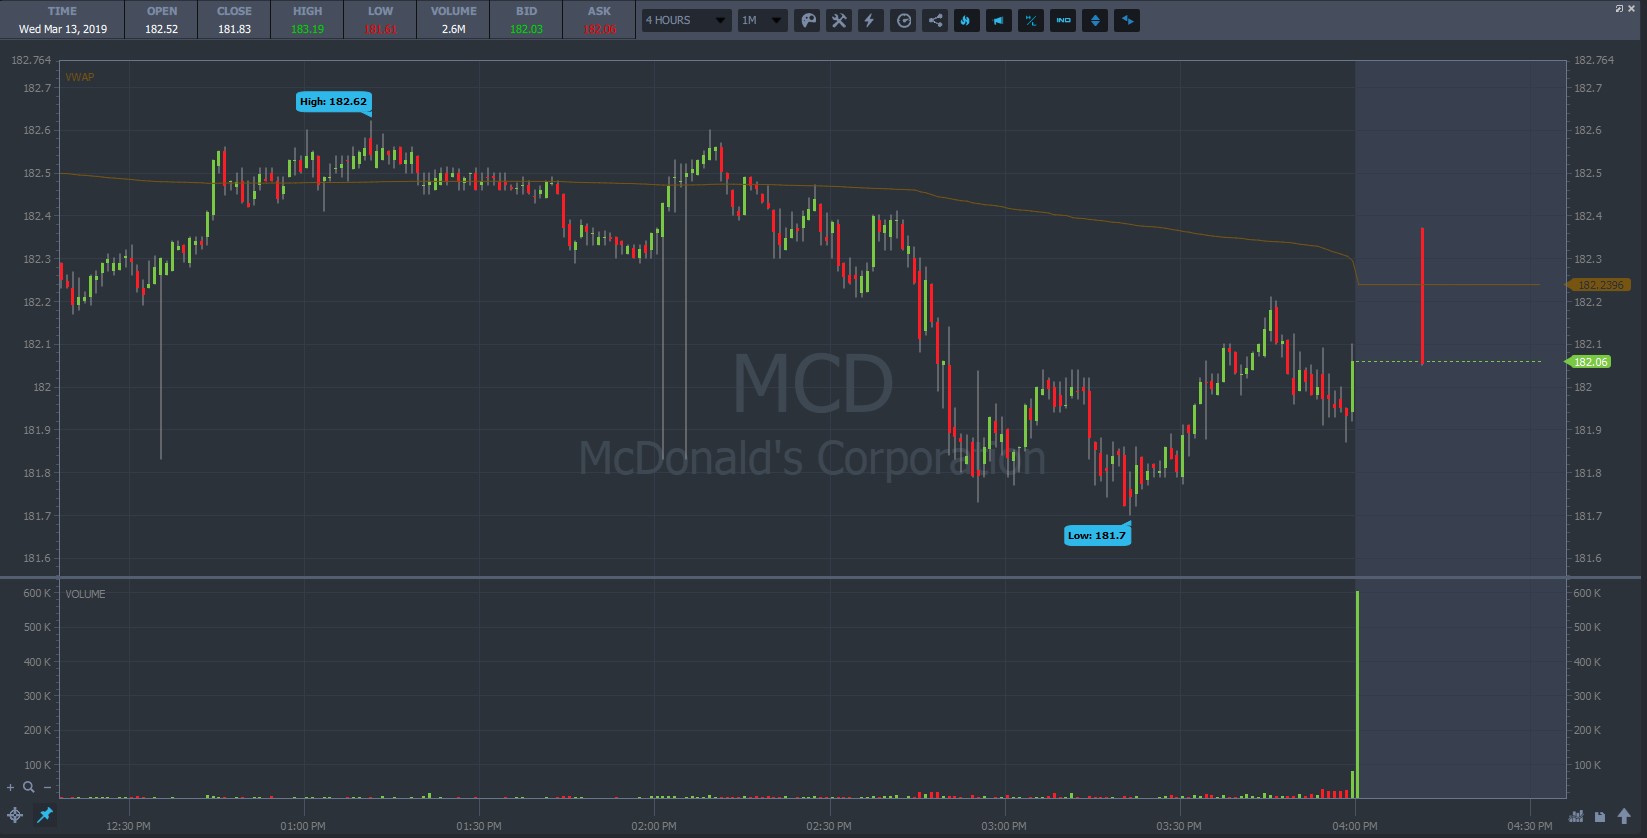 MCD stock chart